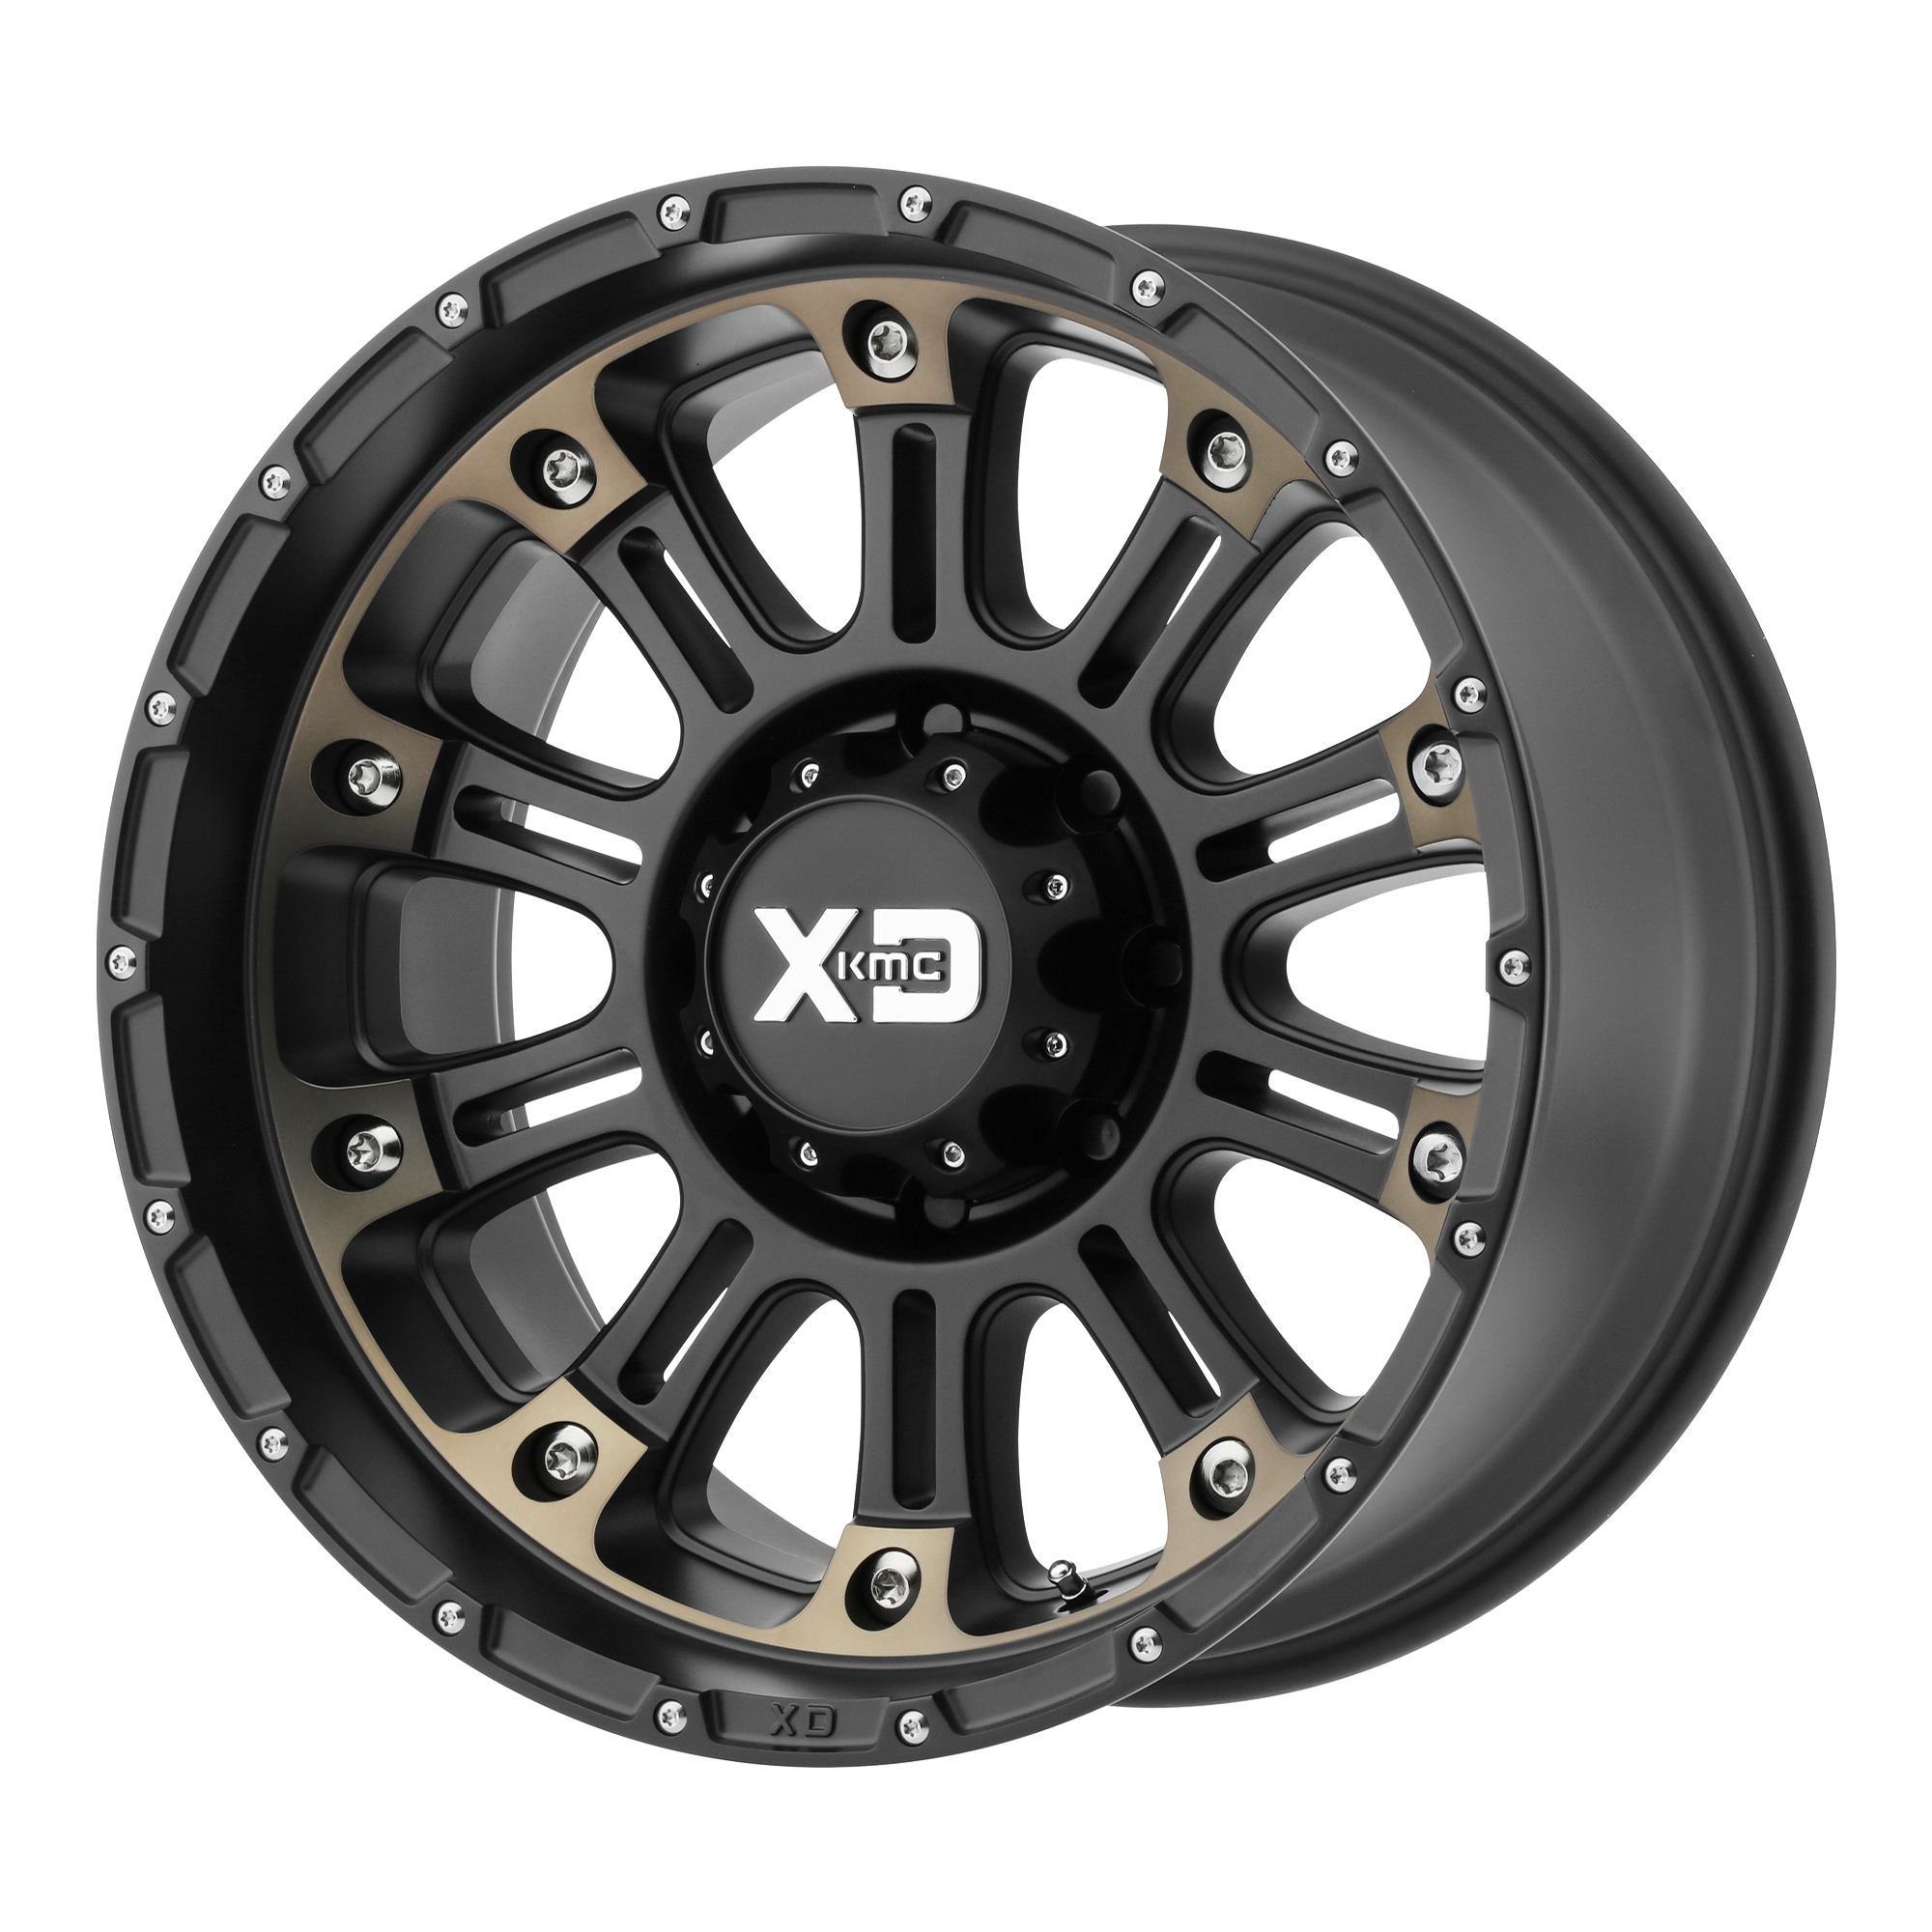 HOSS II 20x9 6x135.00 SATIN BLACK MACH W/ DARK TINT (18 mm) - Tires and Engine Performance